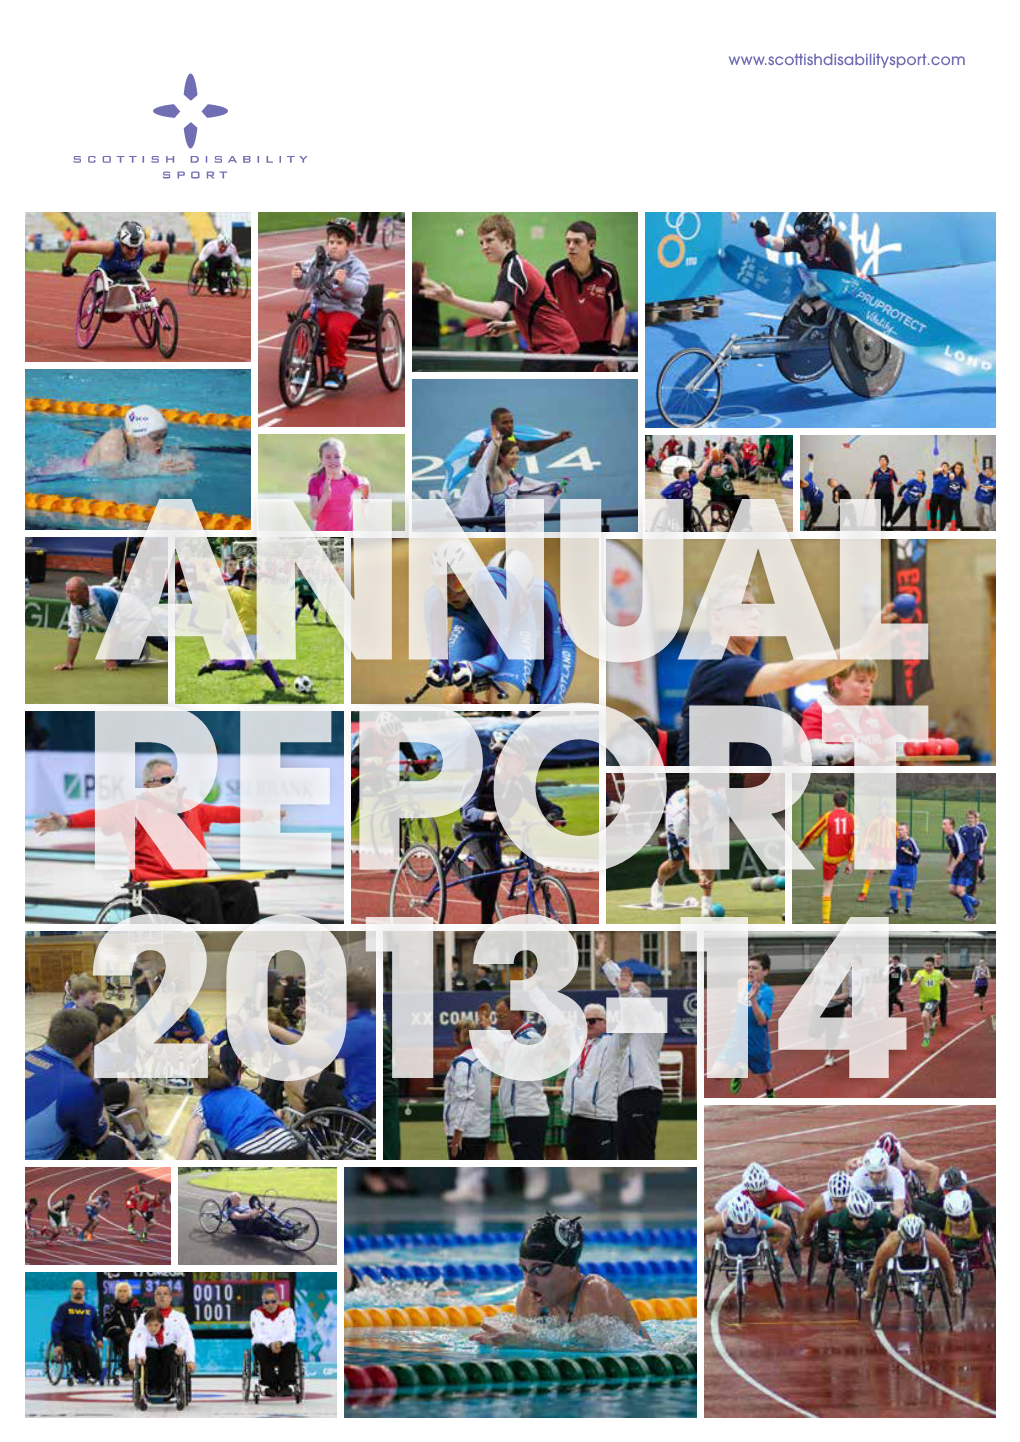 SDS Annual Report 2013-2014